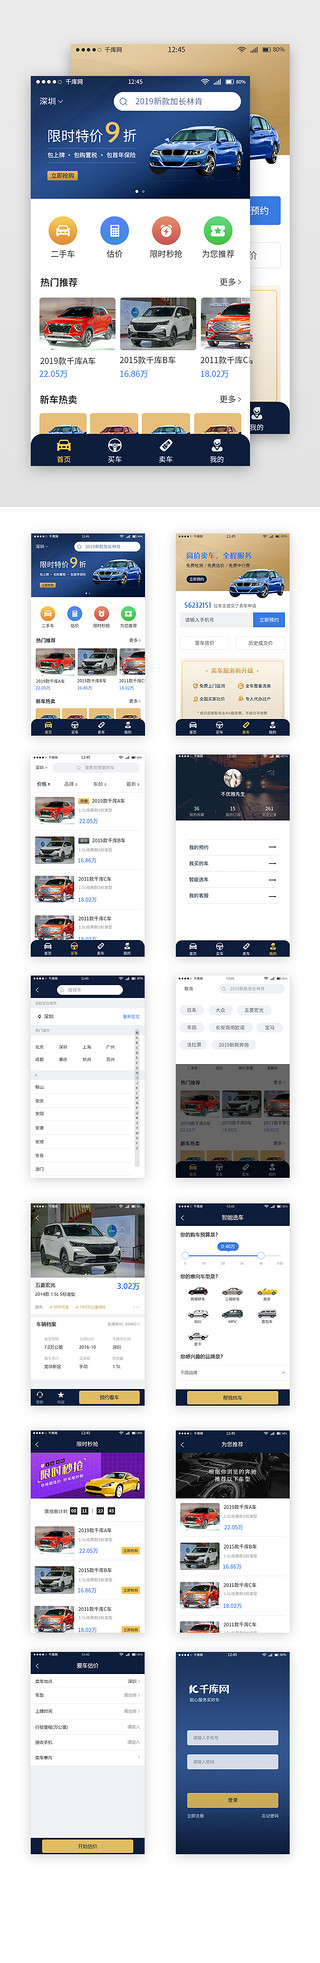 app界面黑色UI设计素材_蓝色大气二手车APP界面